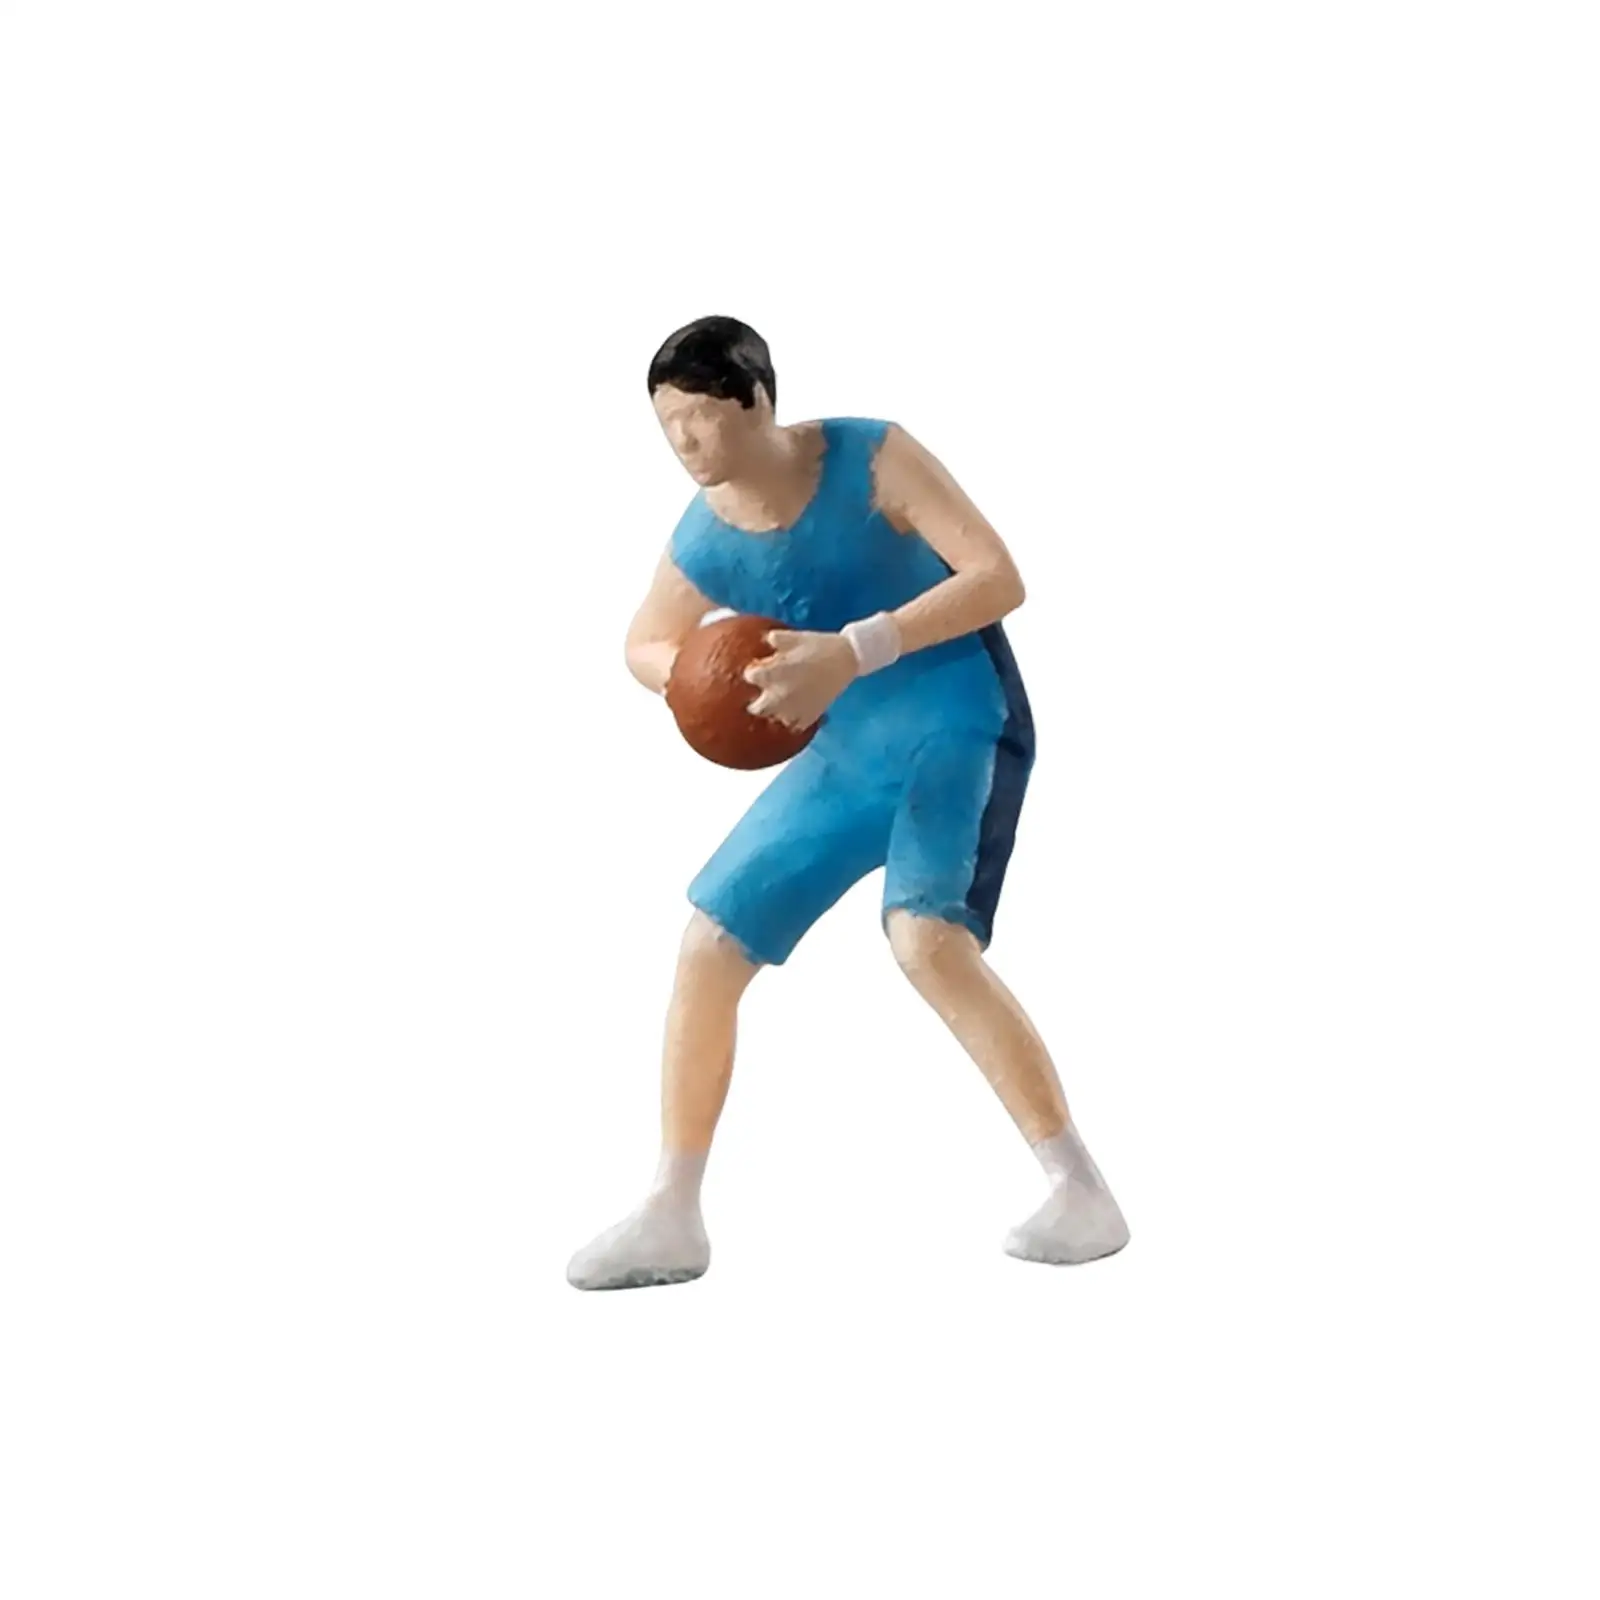 1/64 People Figures Tiny People Model Mini People Figurines Basketball Boy Figures for DIY Scene